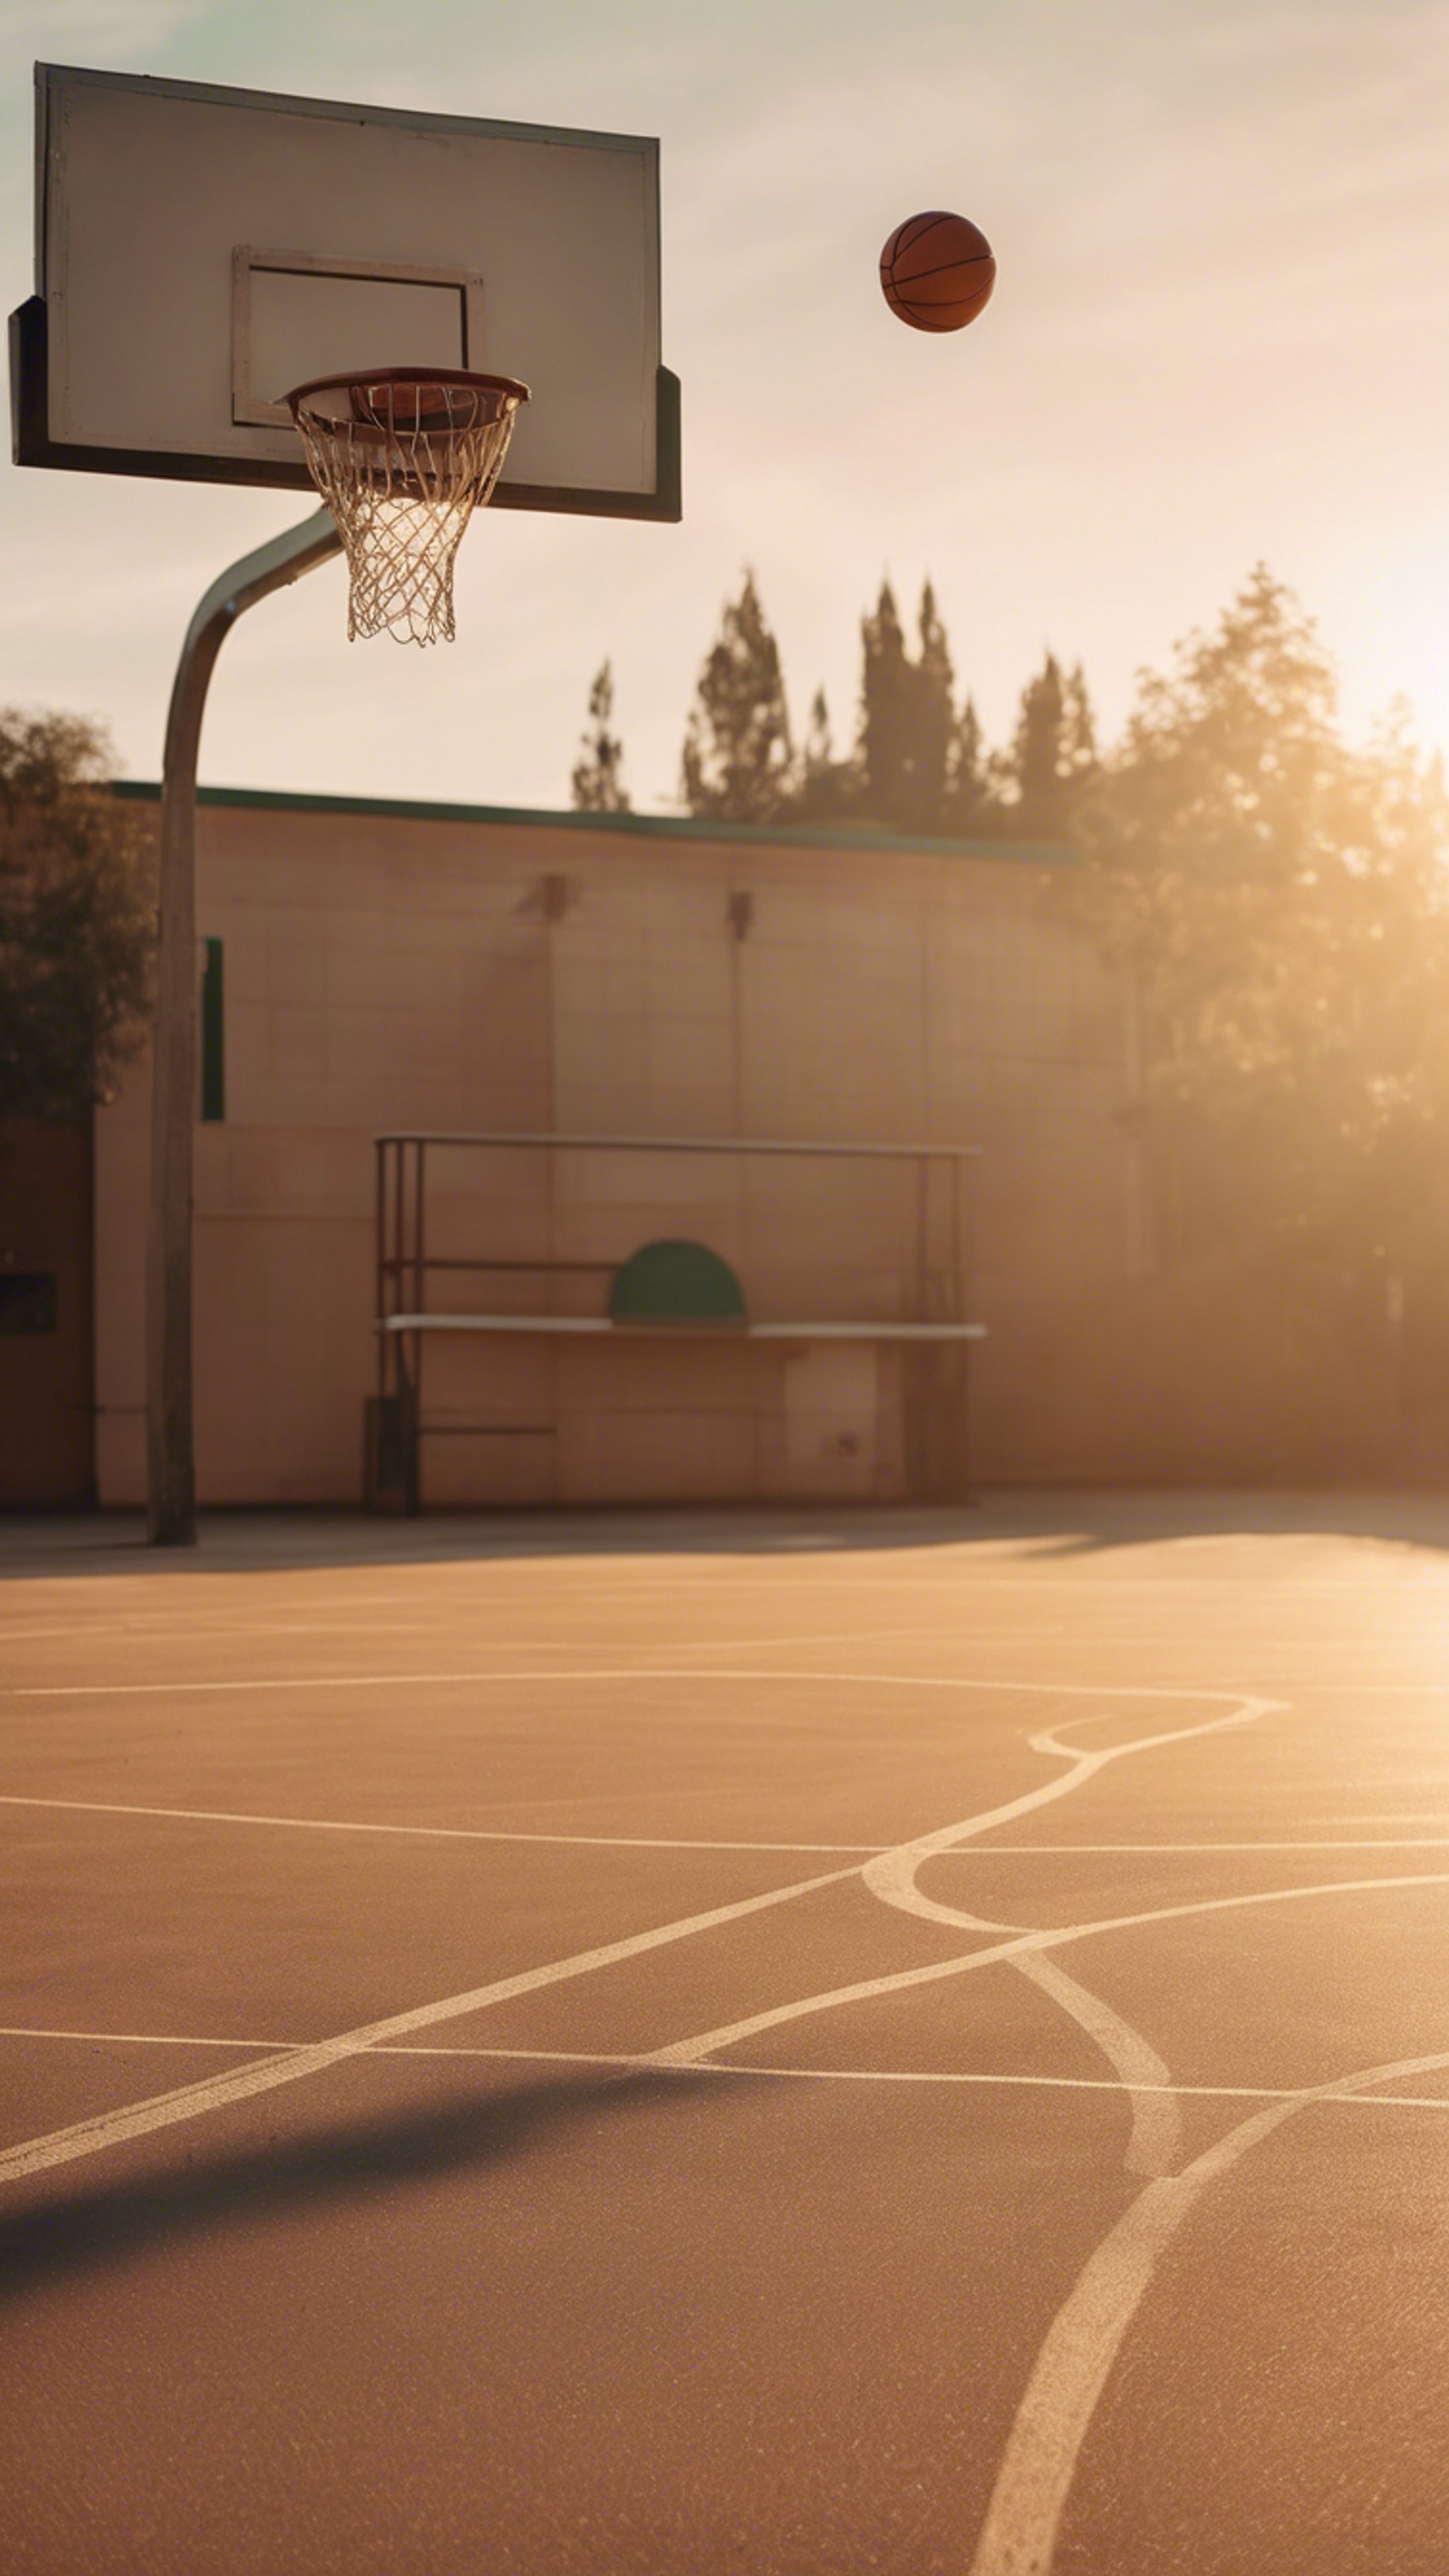 A deserted school’s basketball court in the pacific golden light of sunset.壁紙[5d35315ab9de41dcbc38]